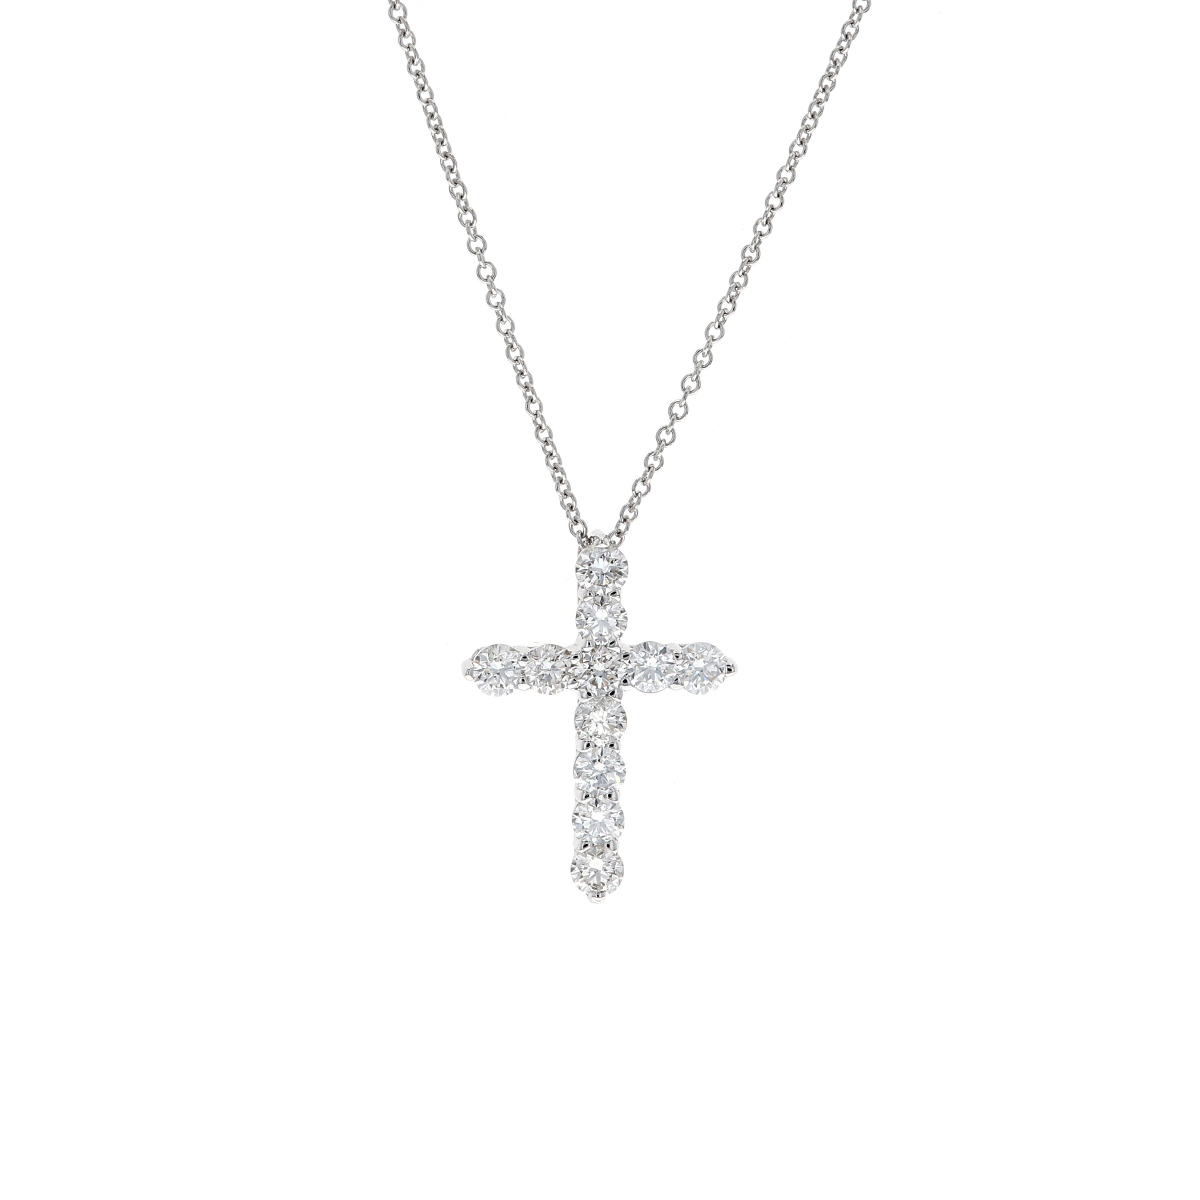 14K White Gold 1.00 Carat Diamond Cross Pendant with Chain